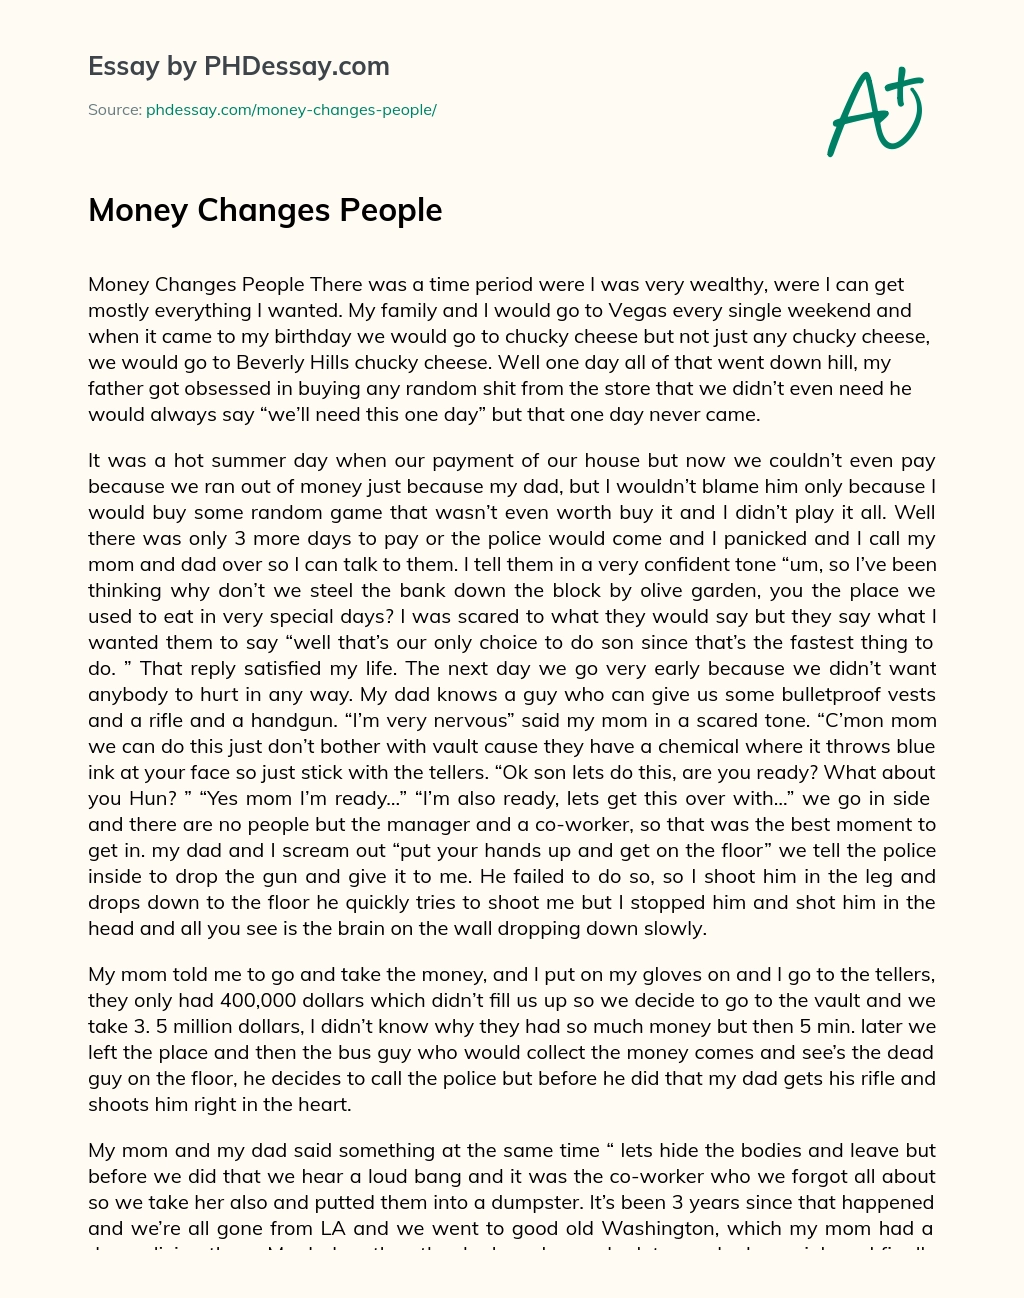 Money Changes People essay